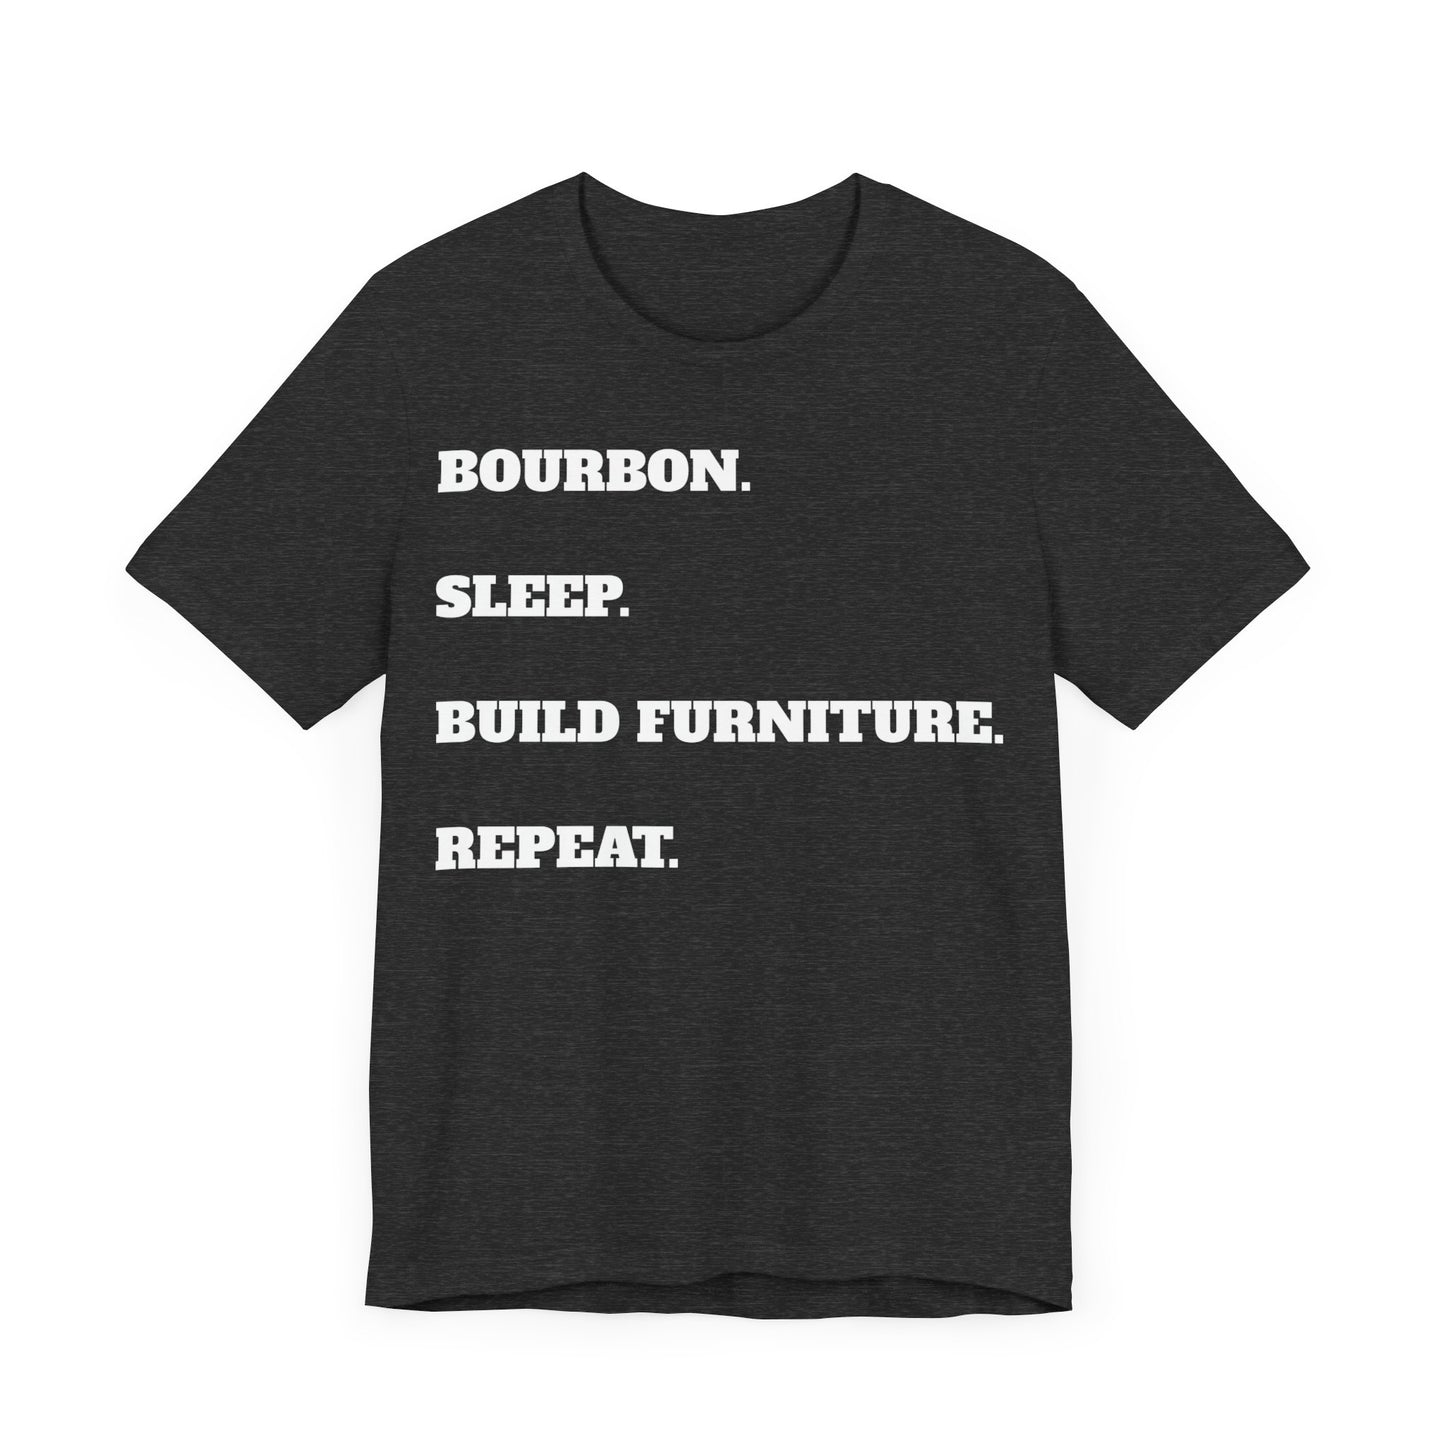 Bourbon. Sleep. Build Furniture. Repeat.